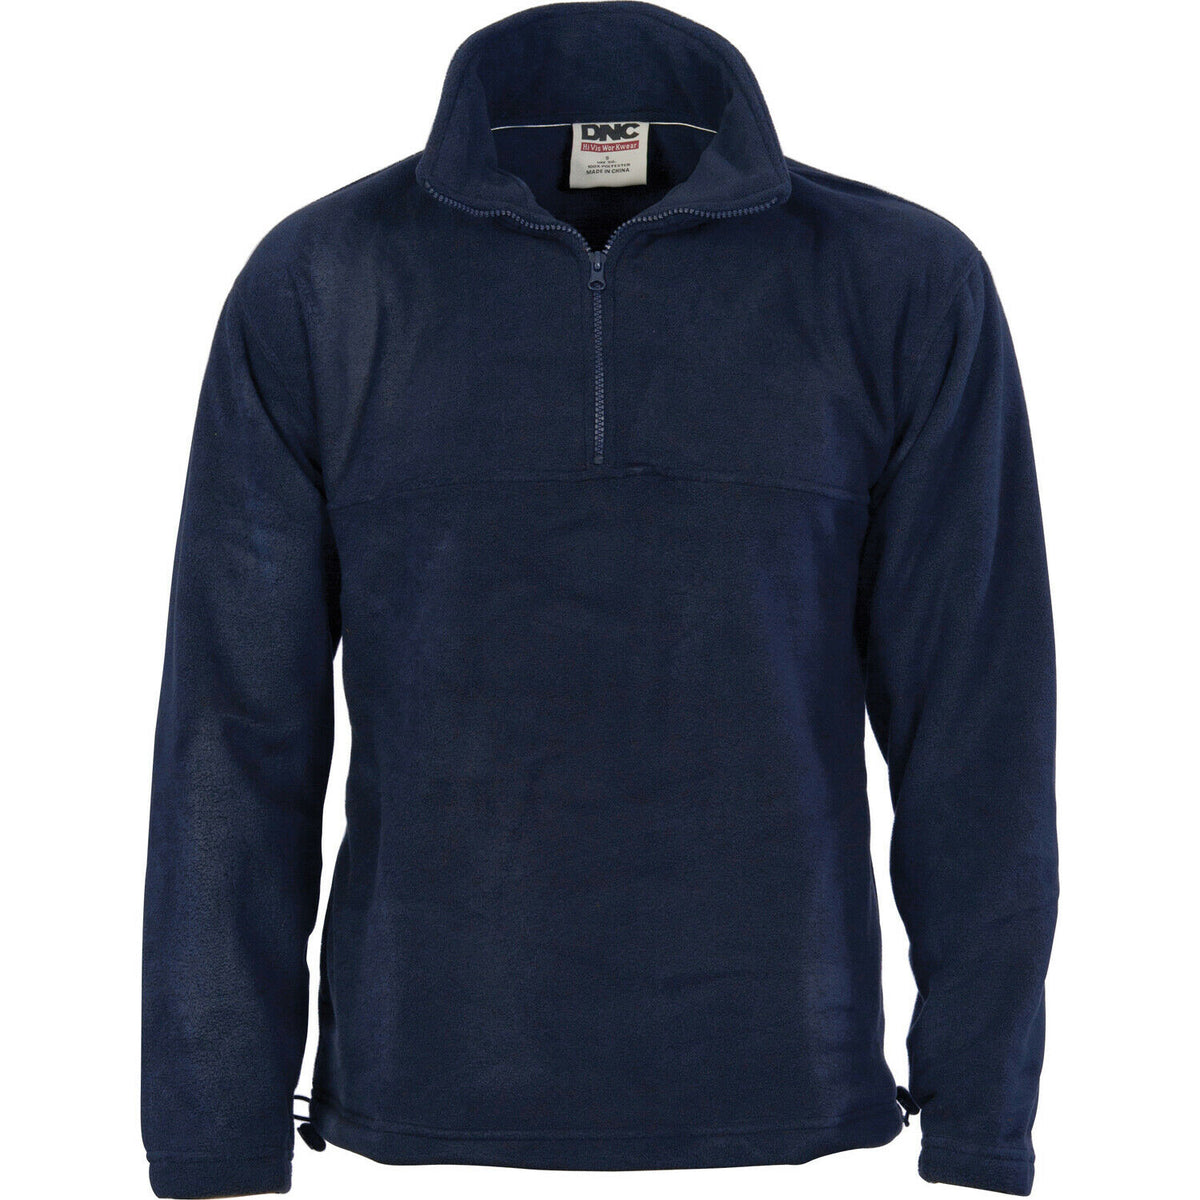 DNC Workwear Unisex Half Zip Polar Fleece Work Warm Winter Comfort Safety 5321